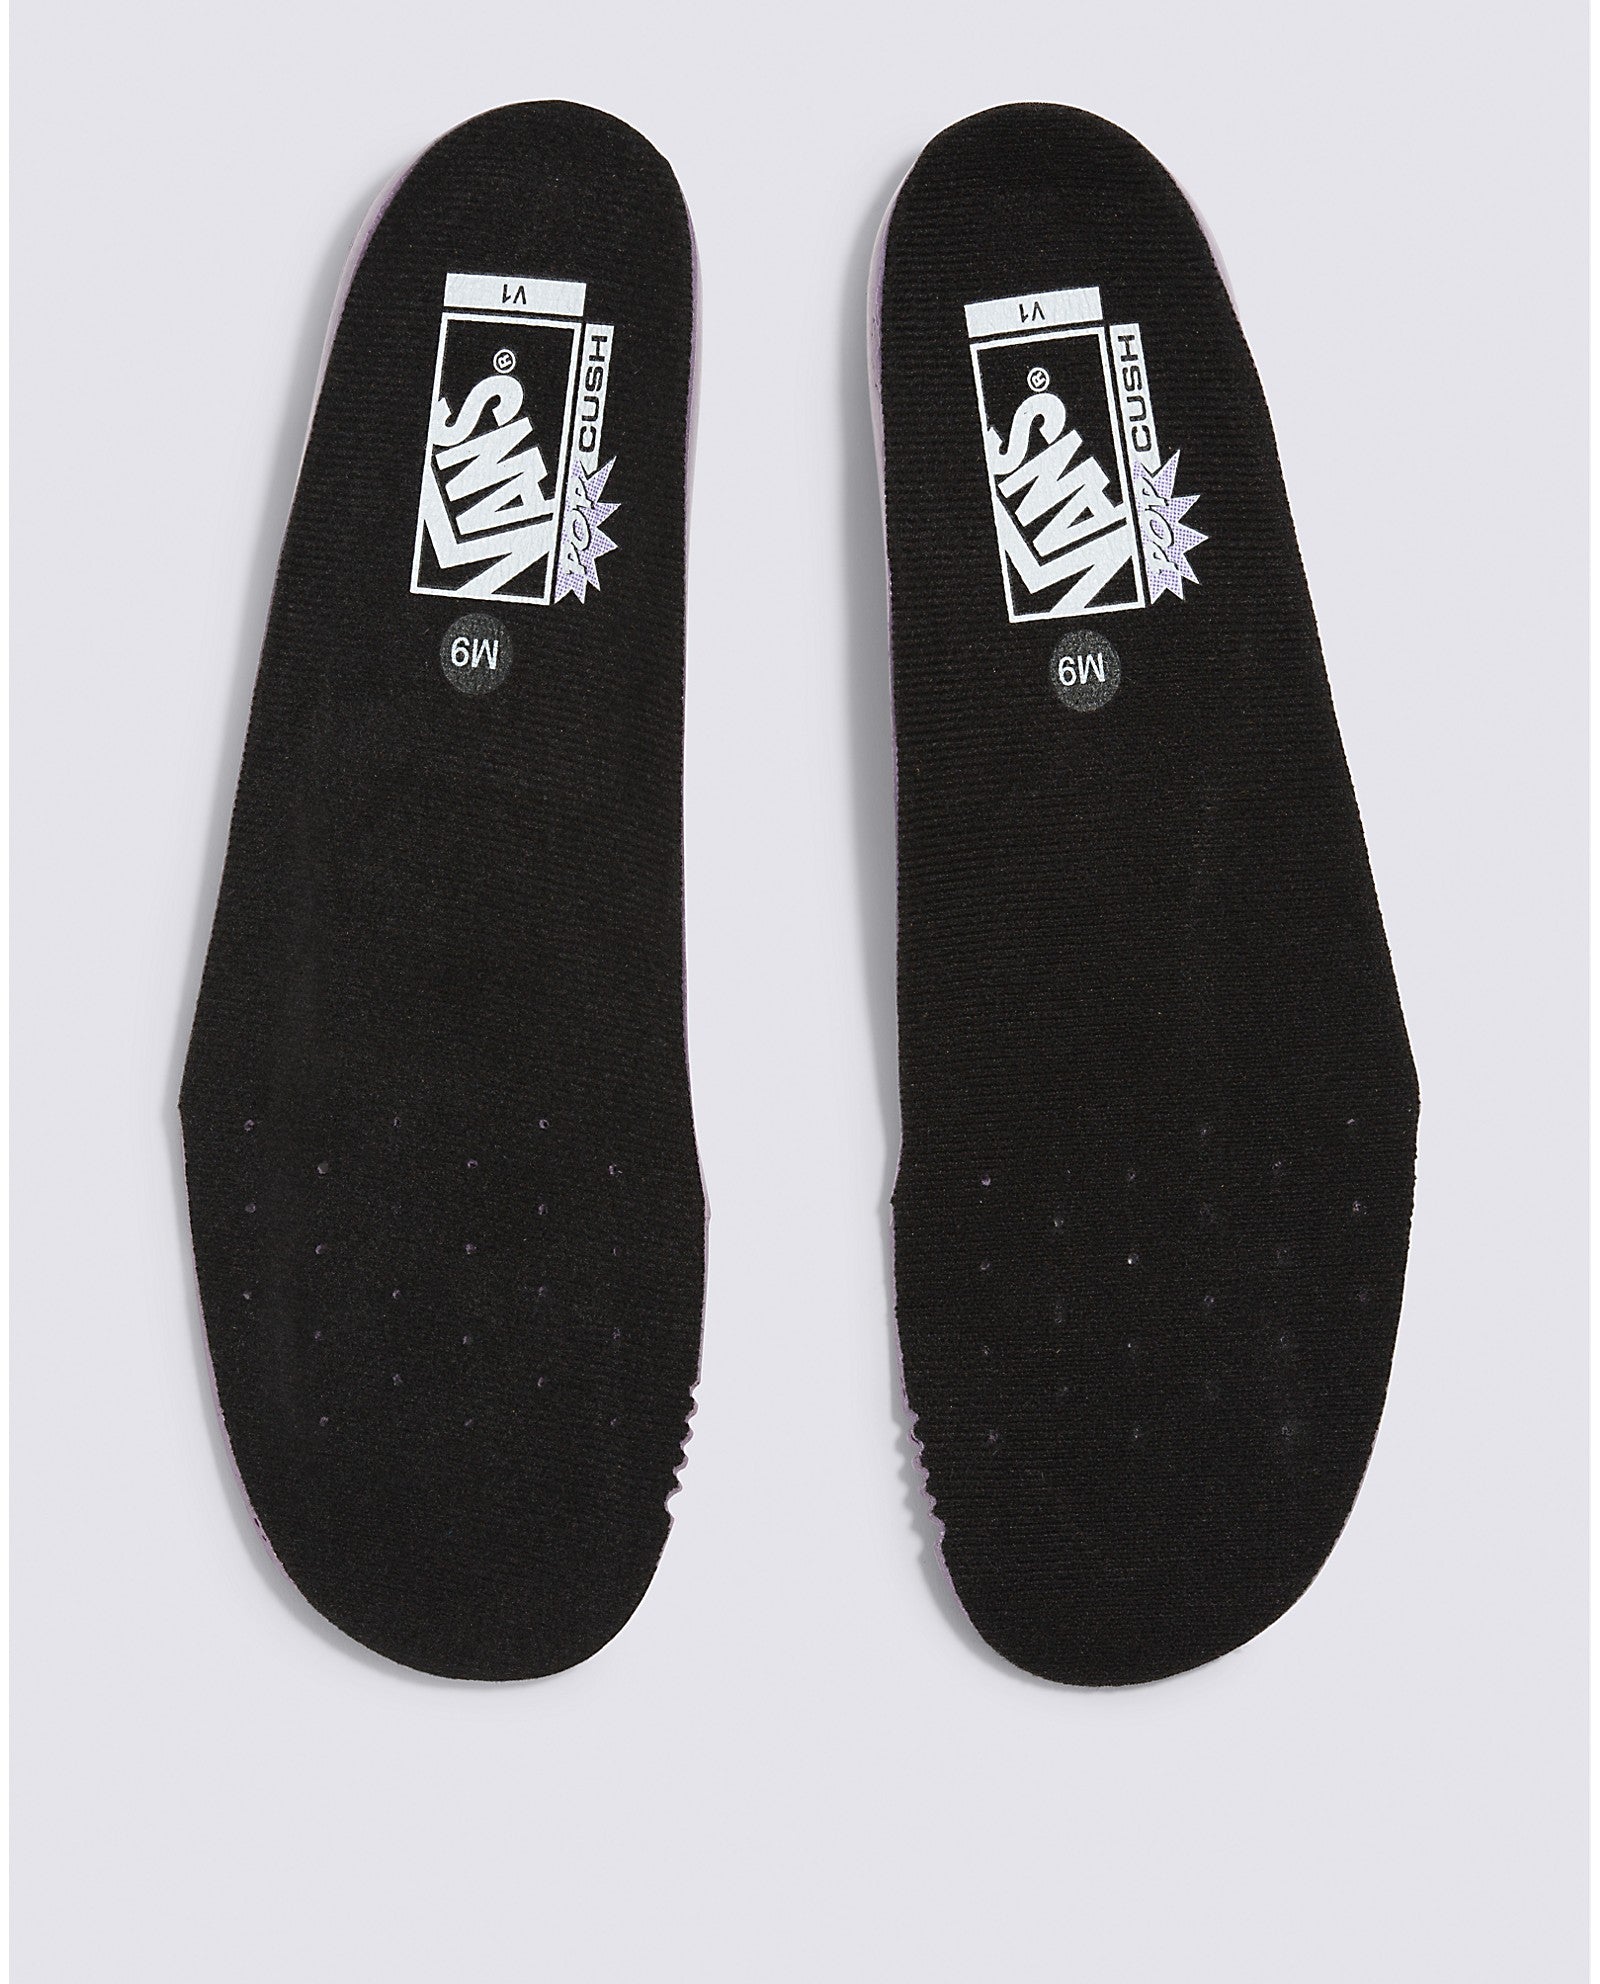 Black/Gum Hi-Standard Linerless Vans Snowboard Boots Insoles